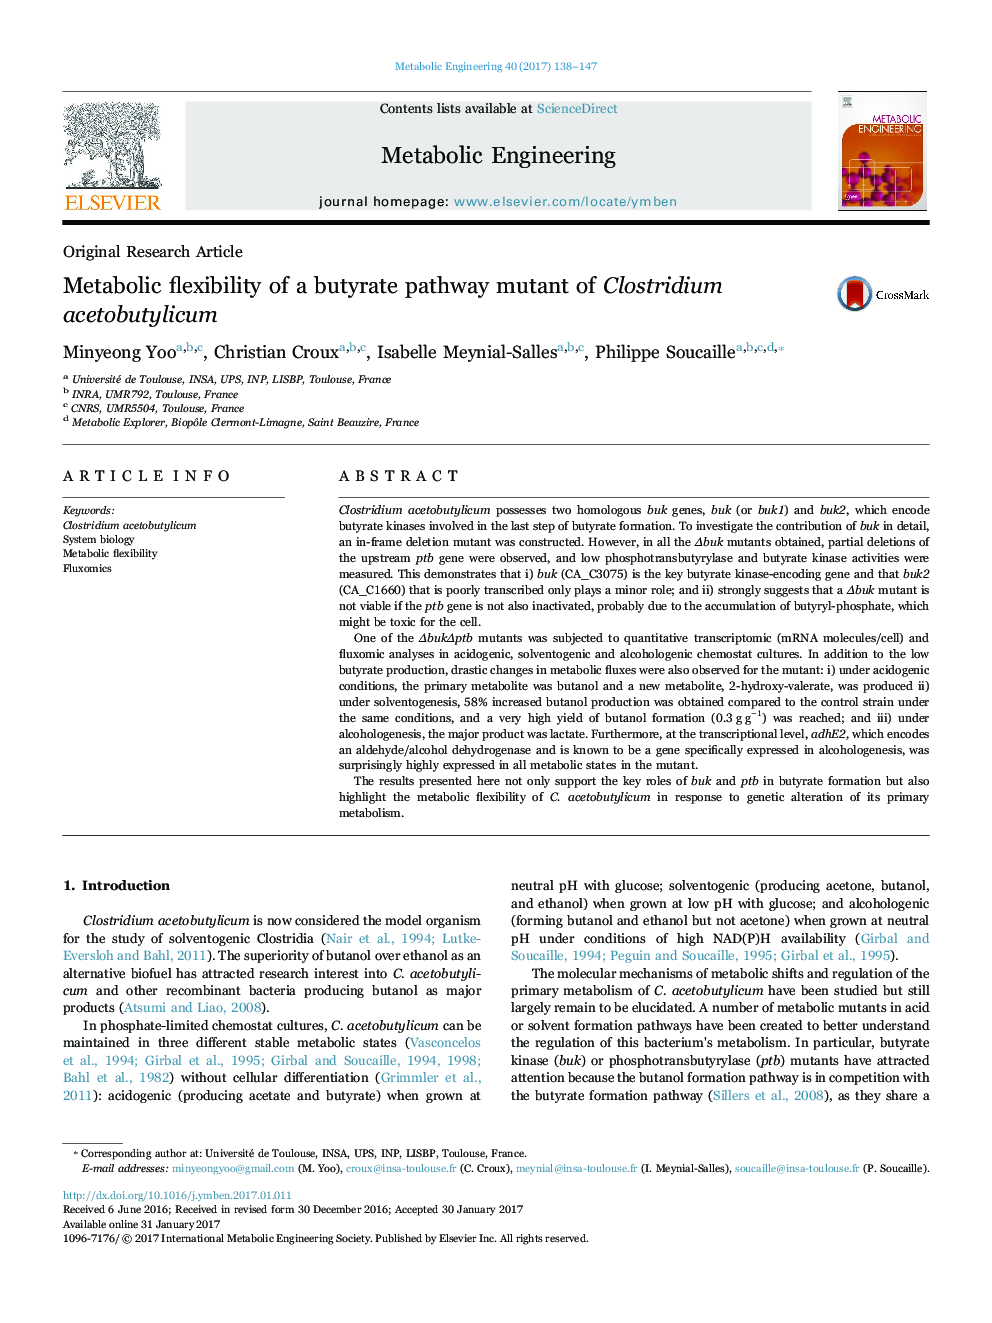 Original Research ArticleMetabolic flexibility of a butyrate pathway mutant of Clostridium acetobutylicum